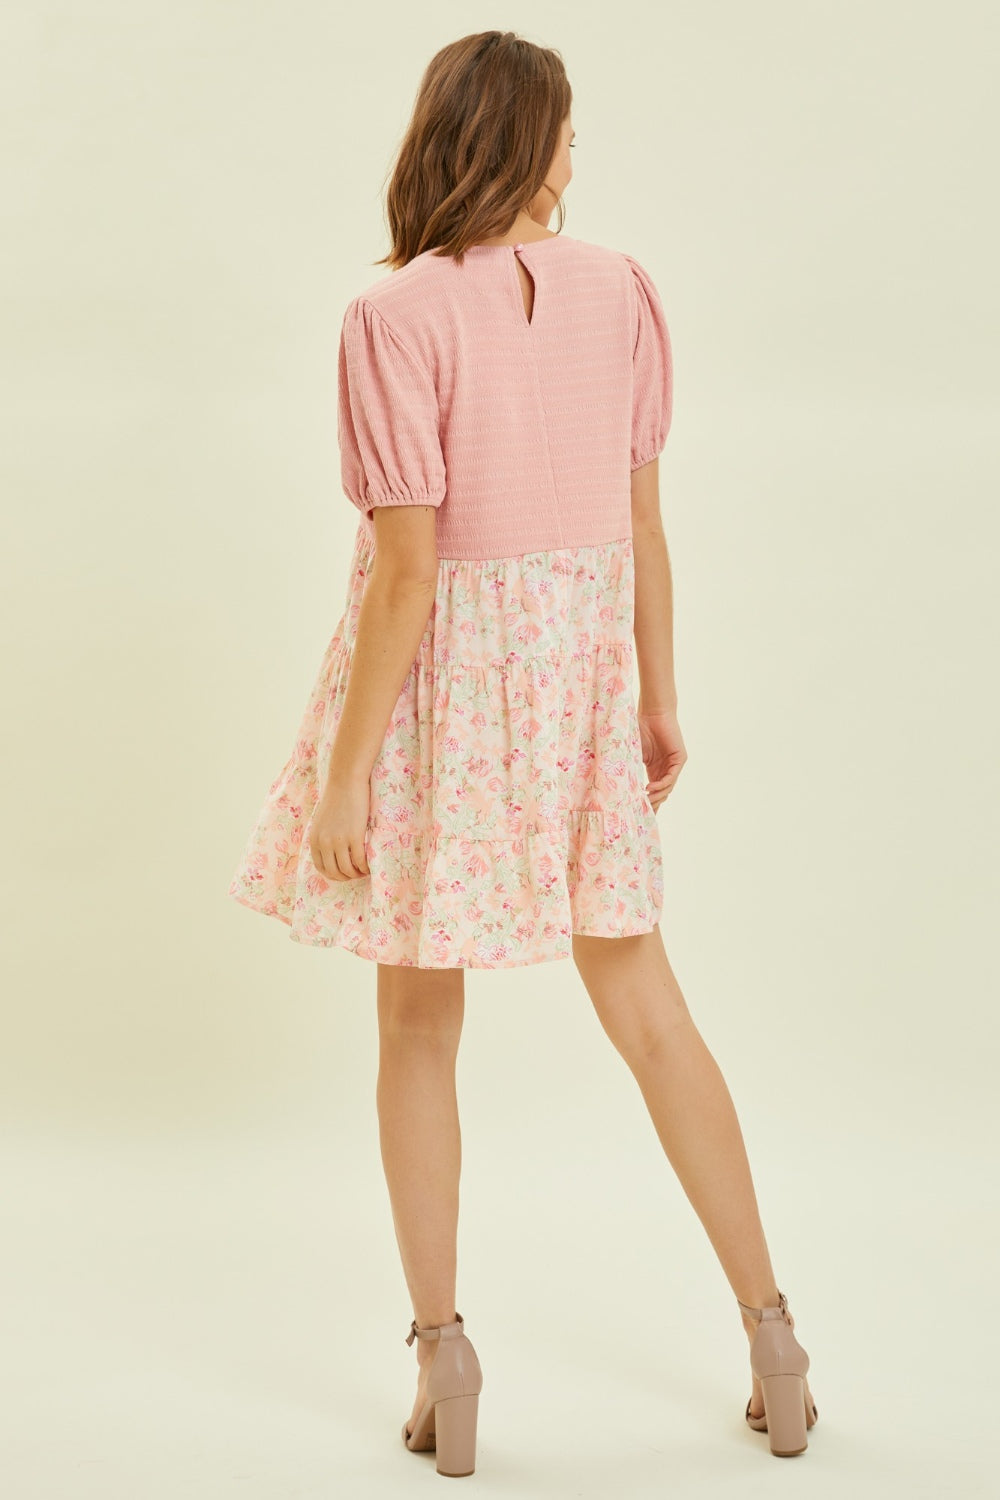 HEYSON Full Size Round Neck Floral Ruffle Hem Mini Dress - Charming Summer Elegance